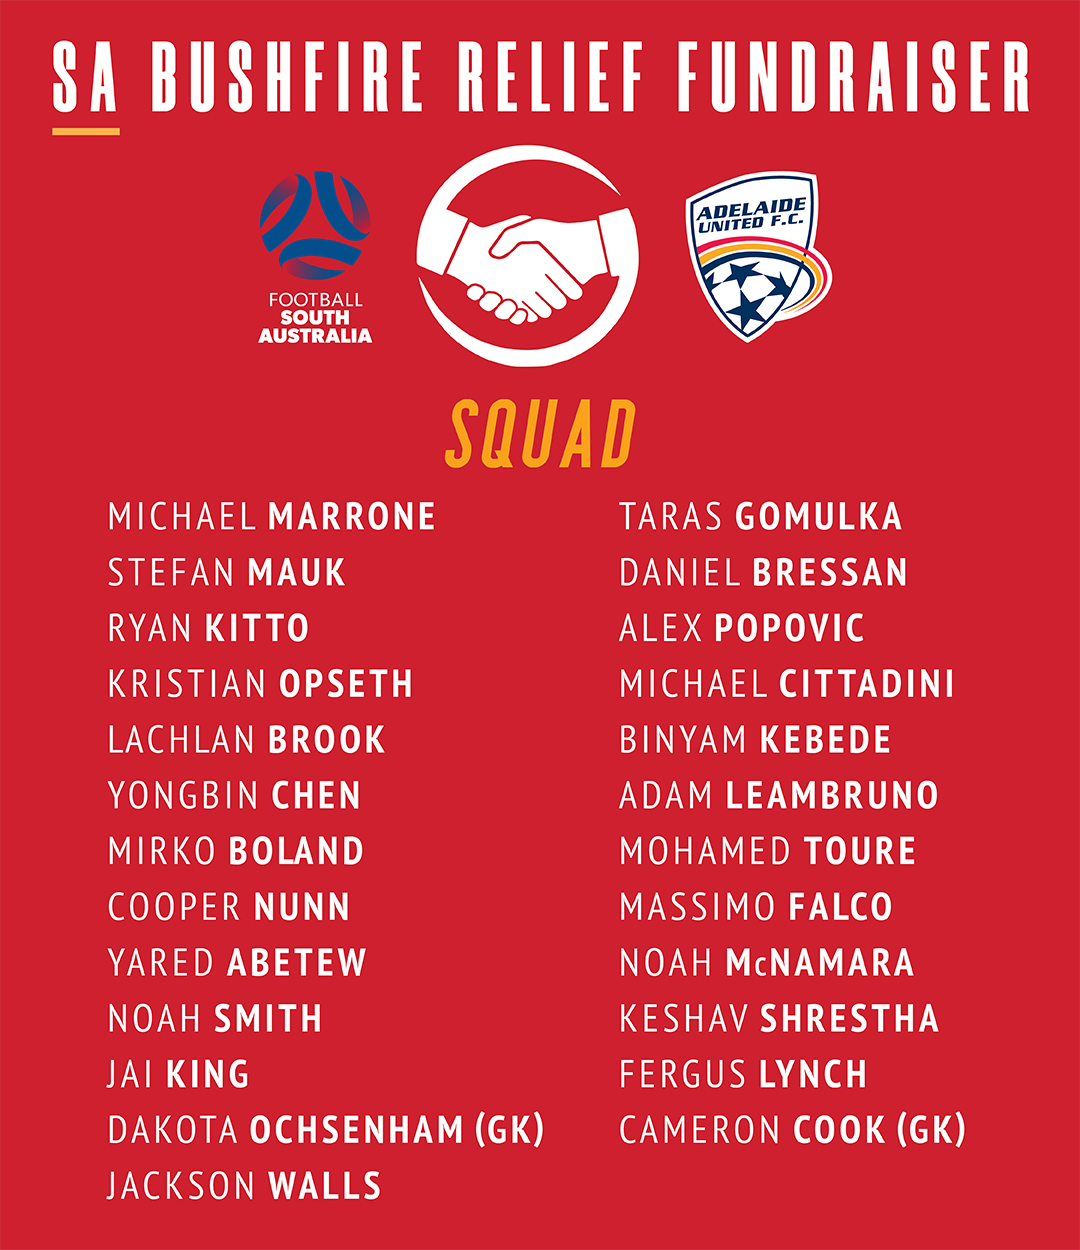 Adelaide United squad for the SA Bushfire Relief Fundraiser